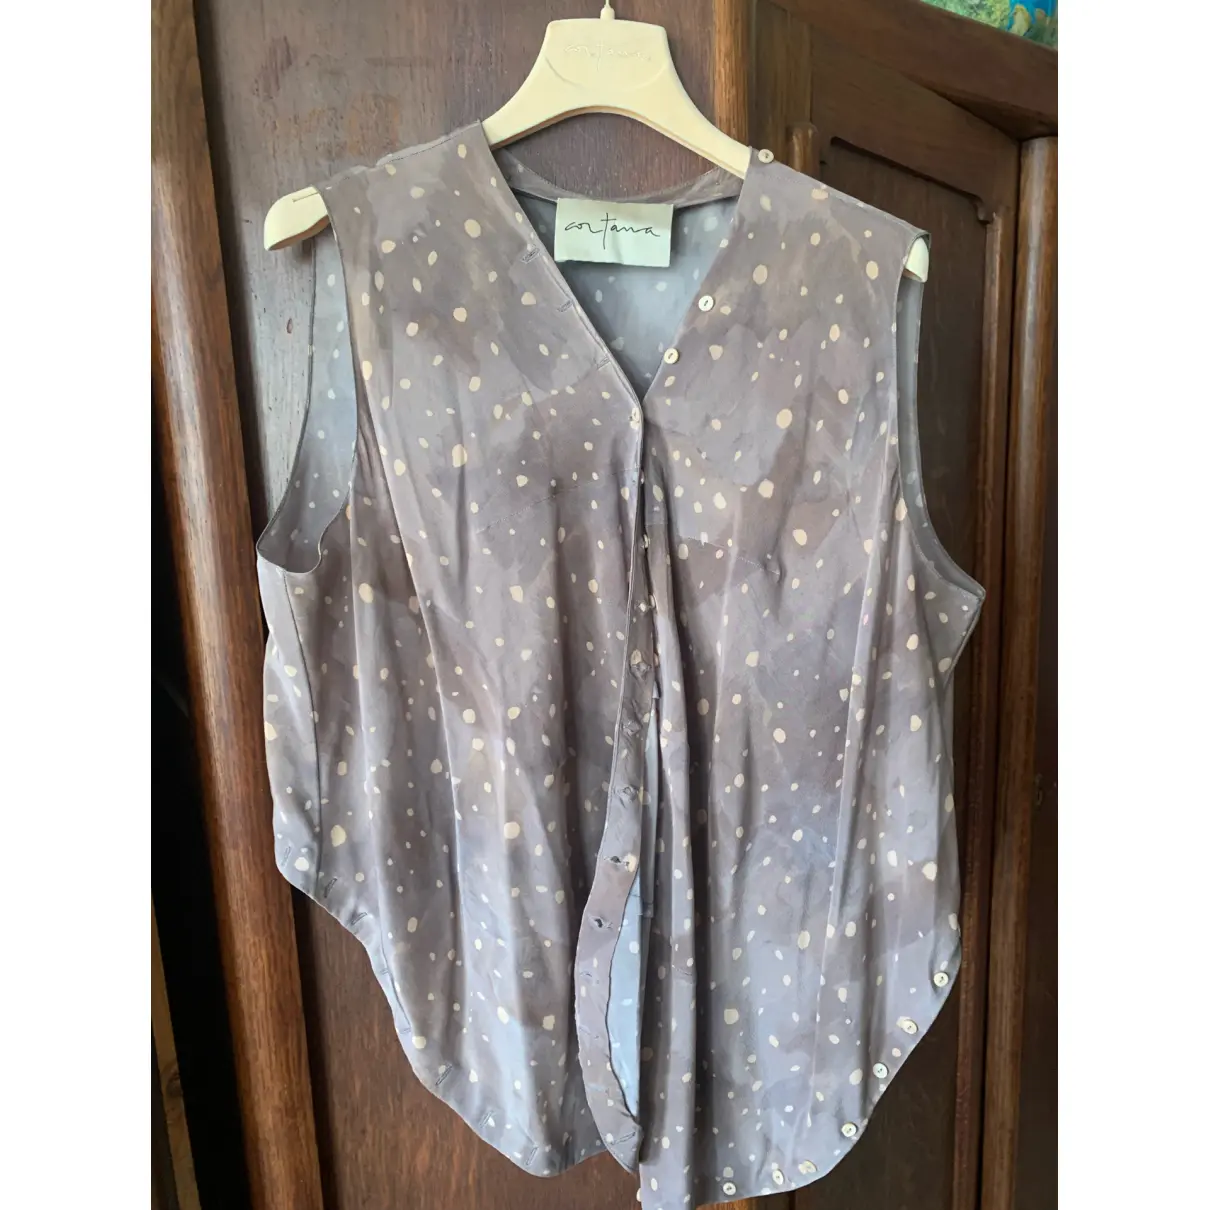 Buy CORTANA Silk blouse online